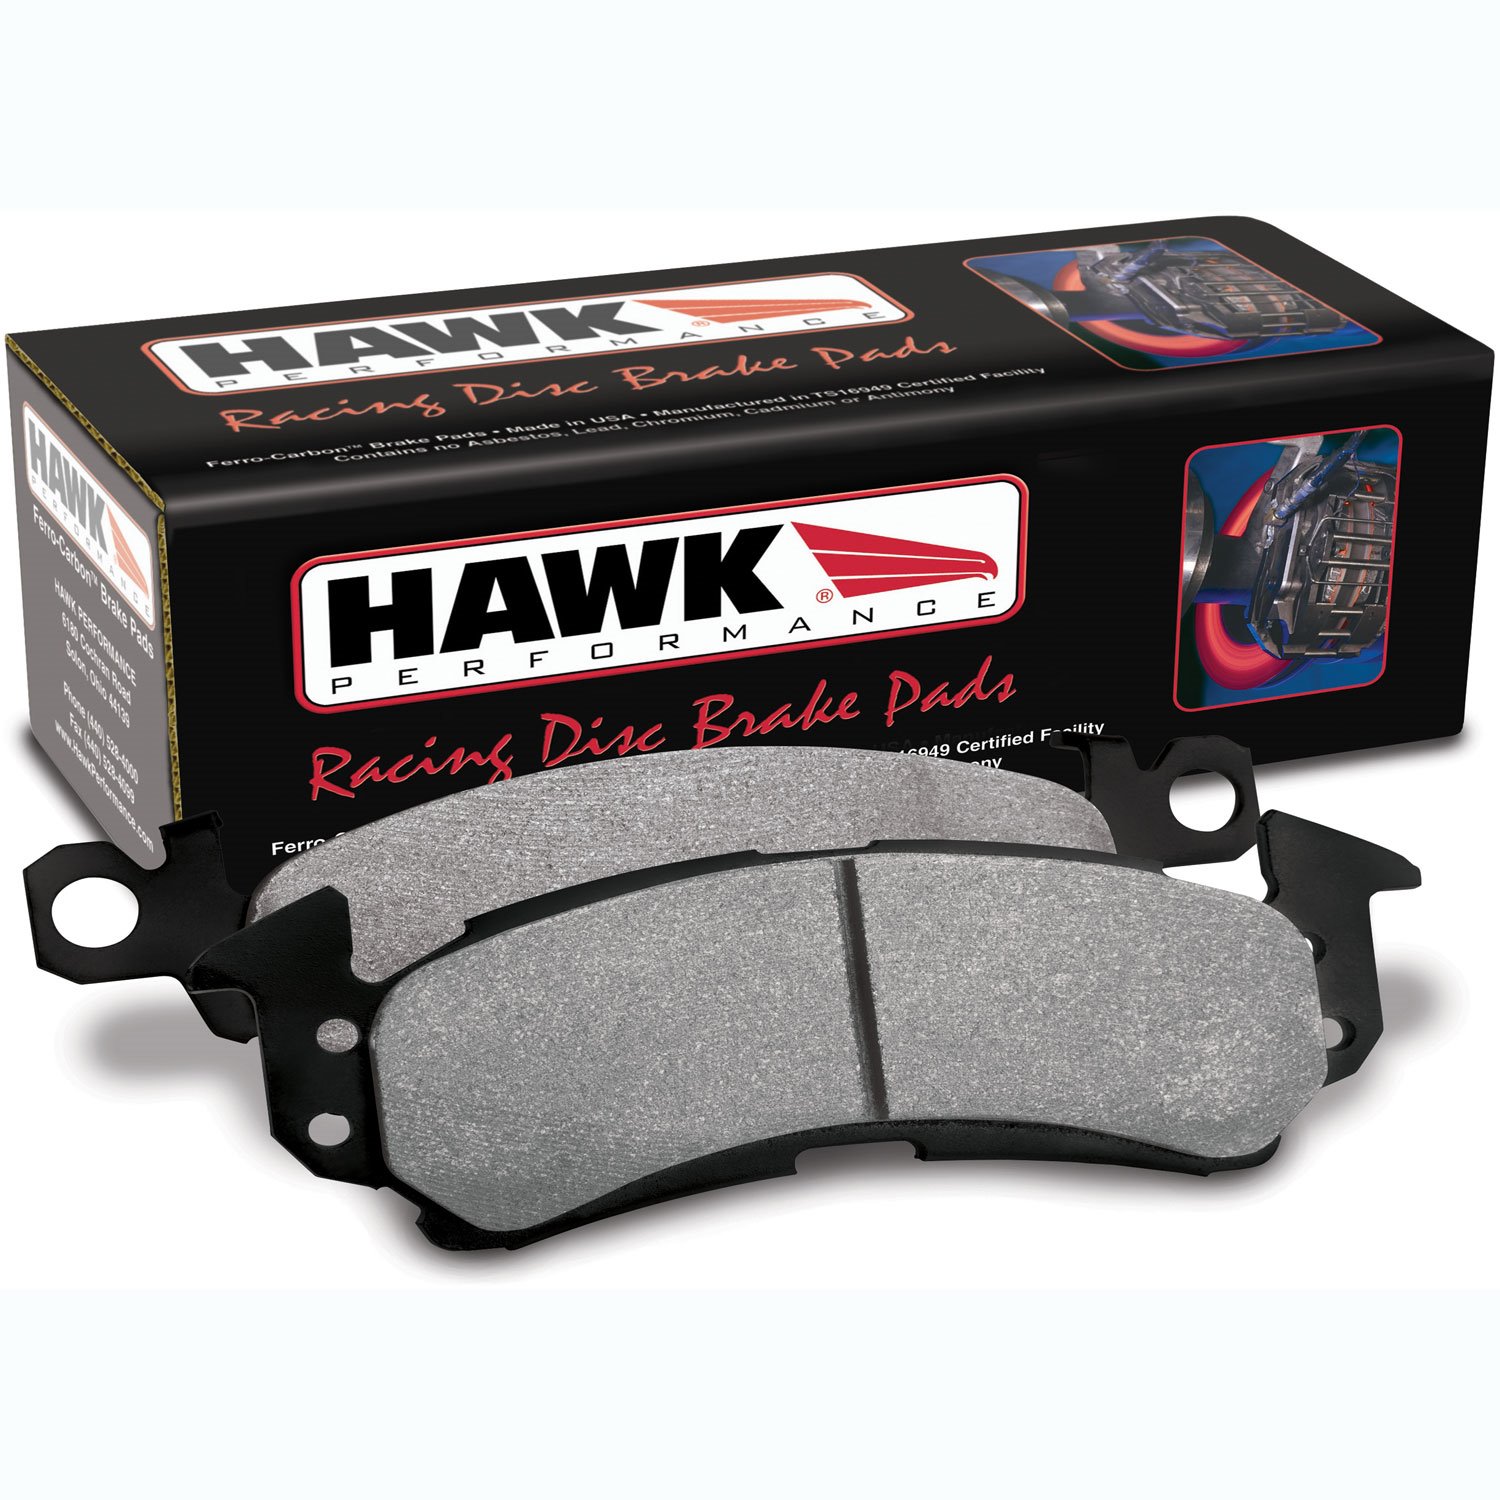 Disc Brake Pad HT-10 w/0.635 Thickness